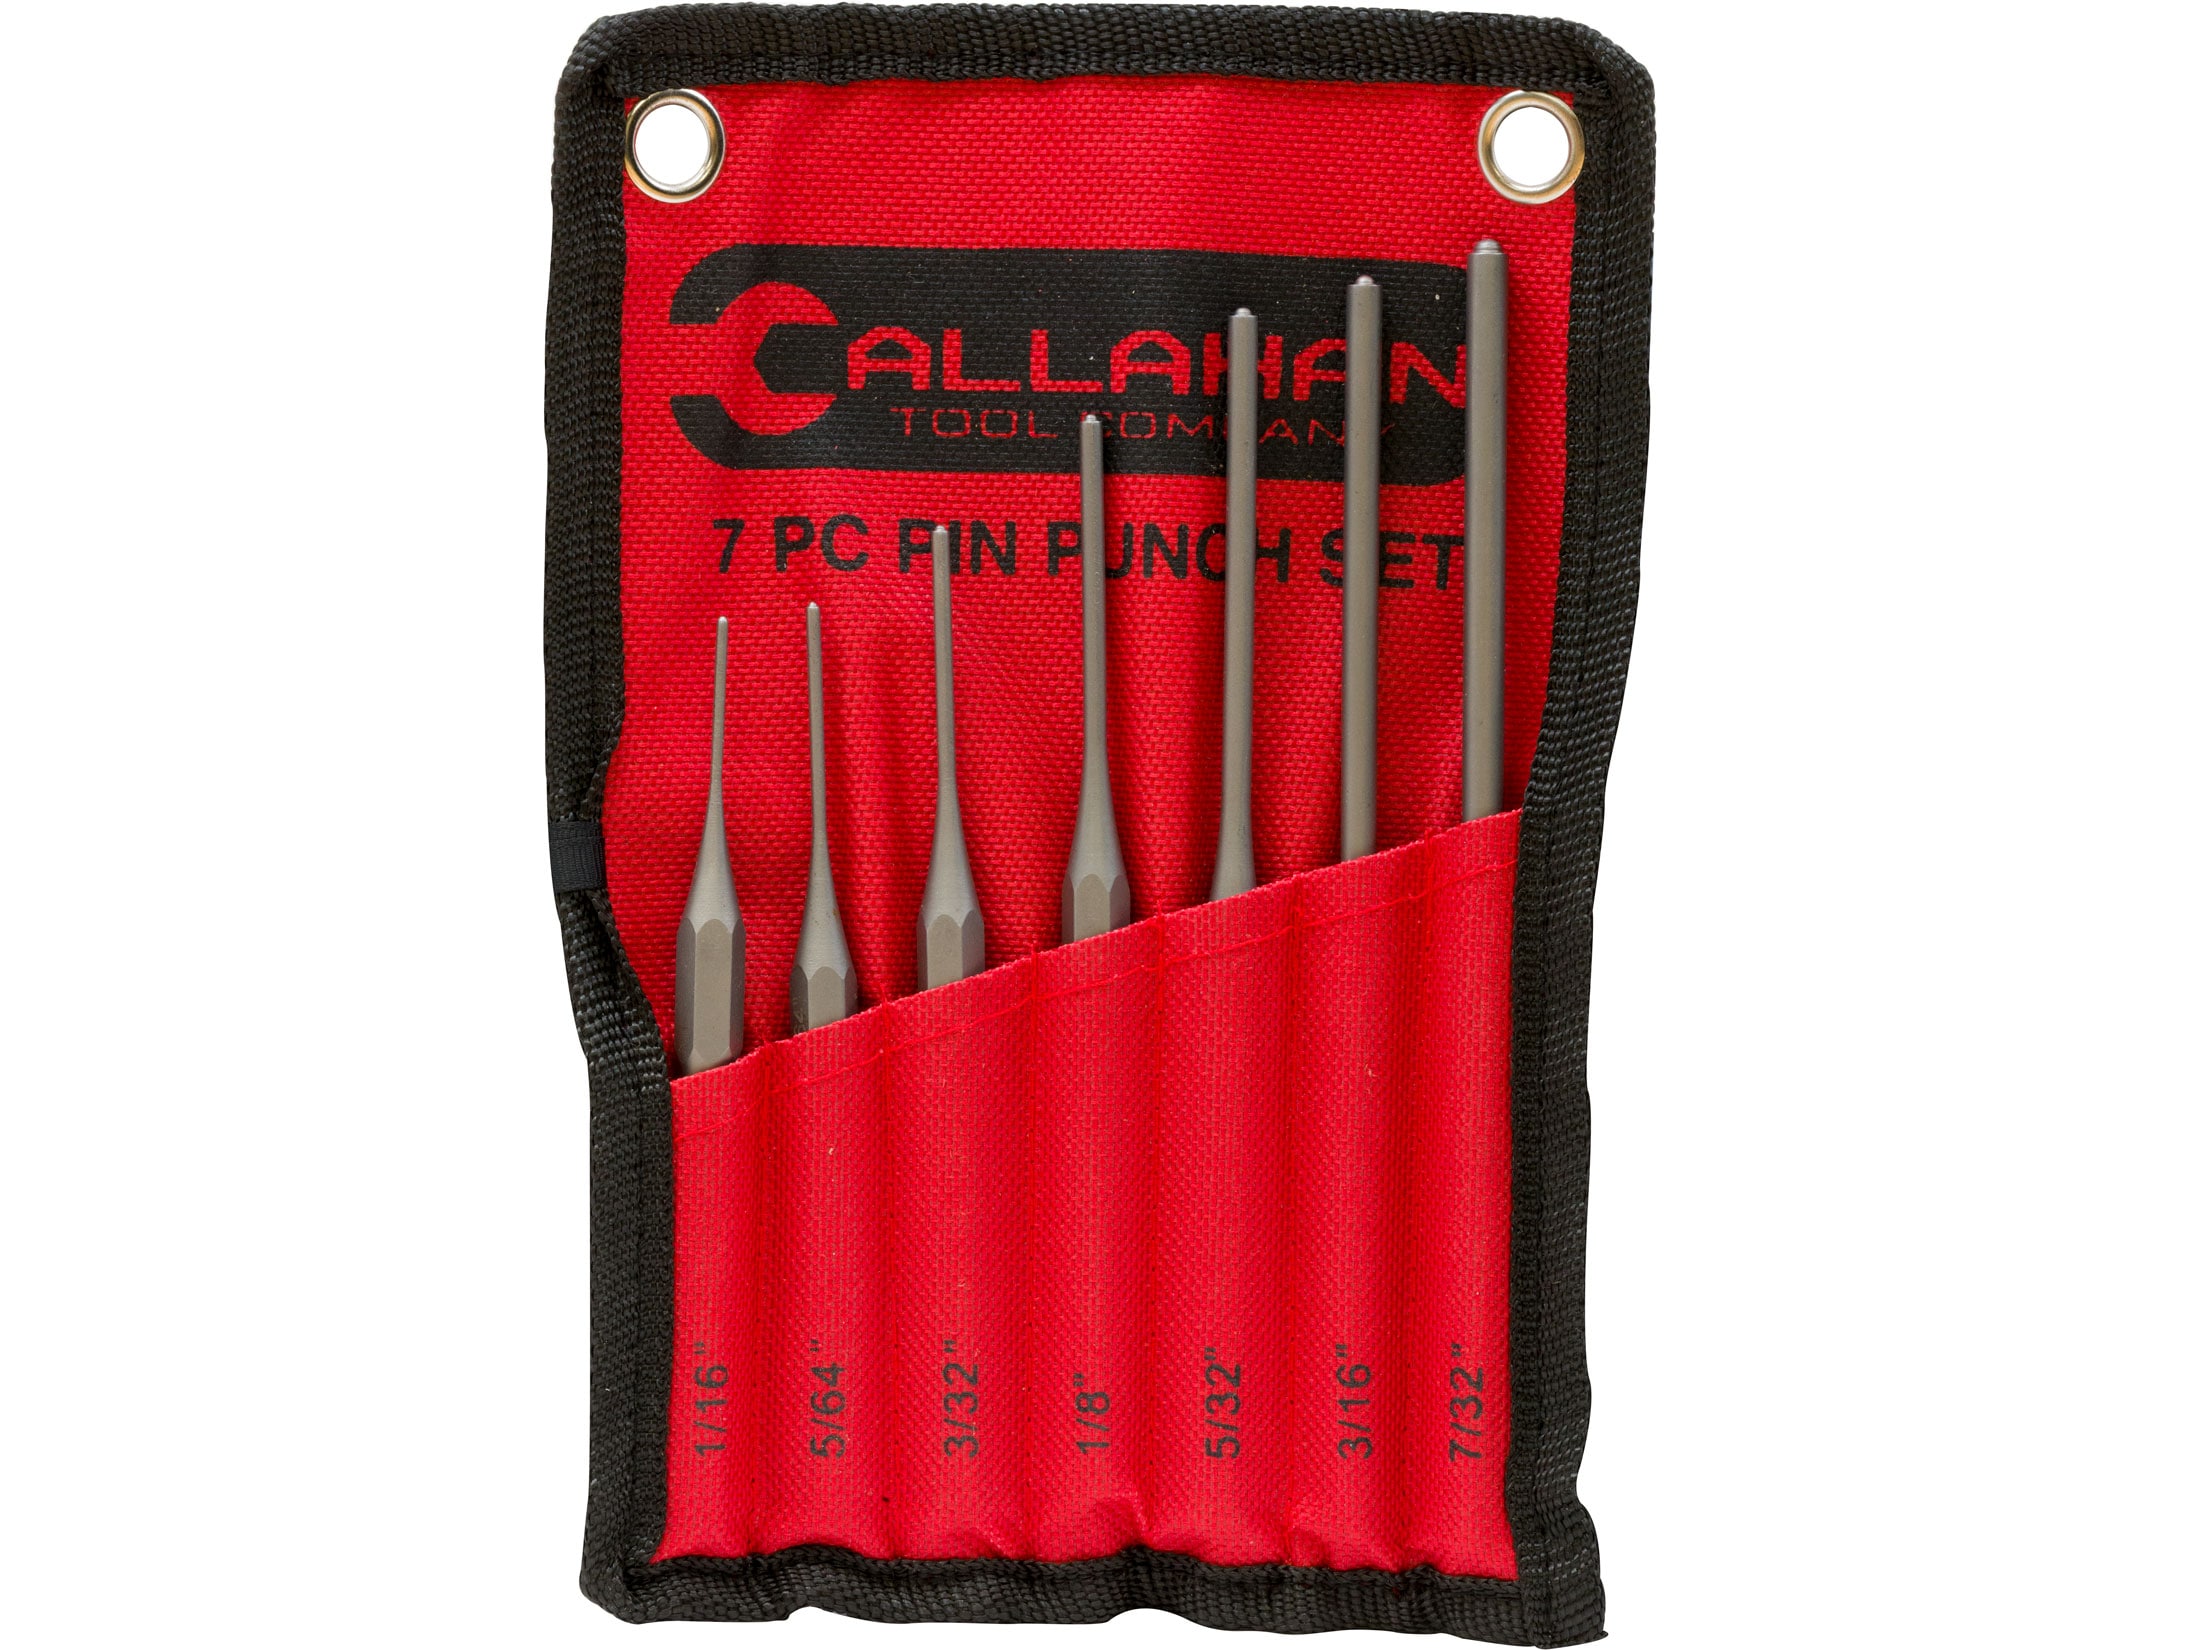 Callahan Roll Pin Punch Set 7-Piece Steel